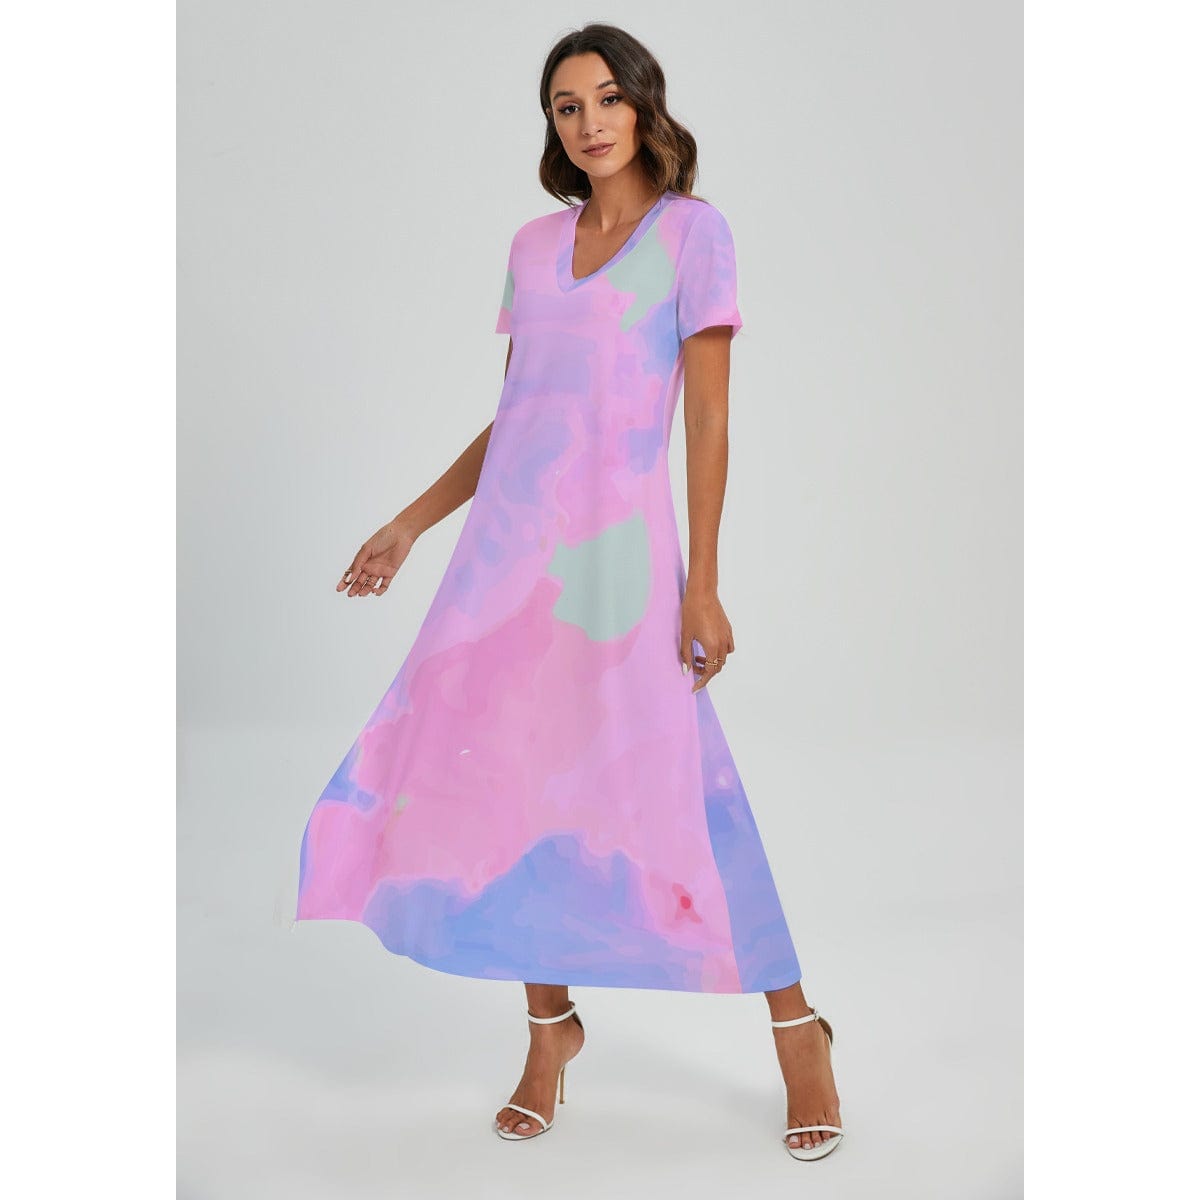 Yoycol Dresses All-Over Print Women's V-neck Dress With Side Slit